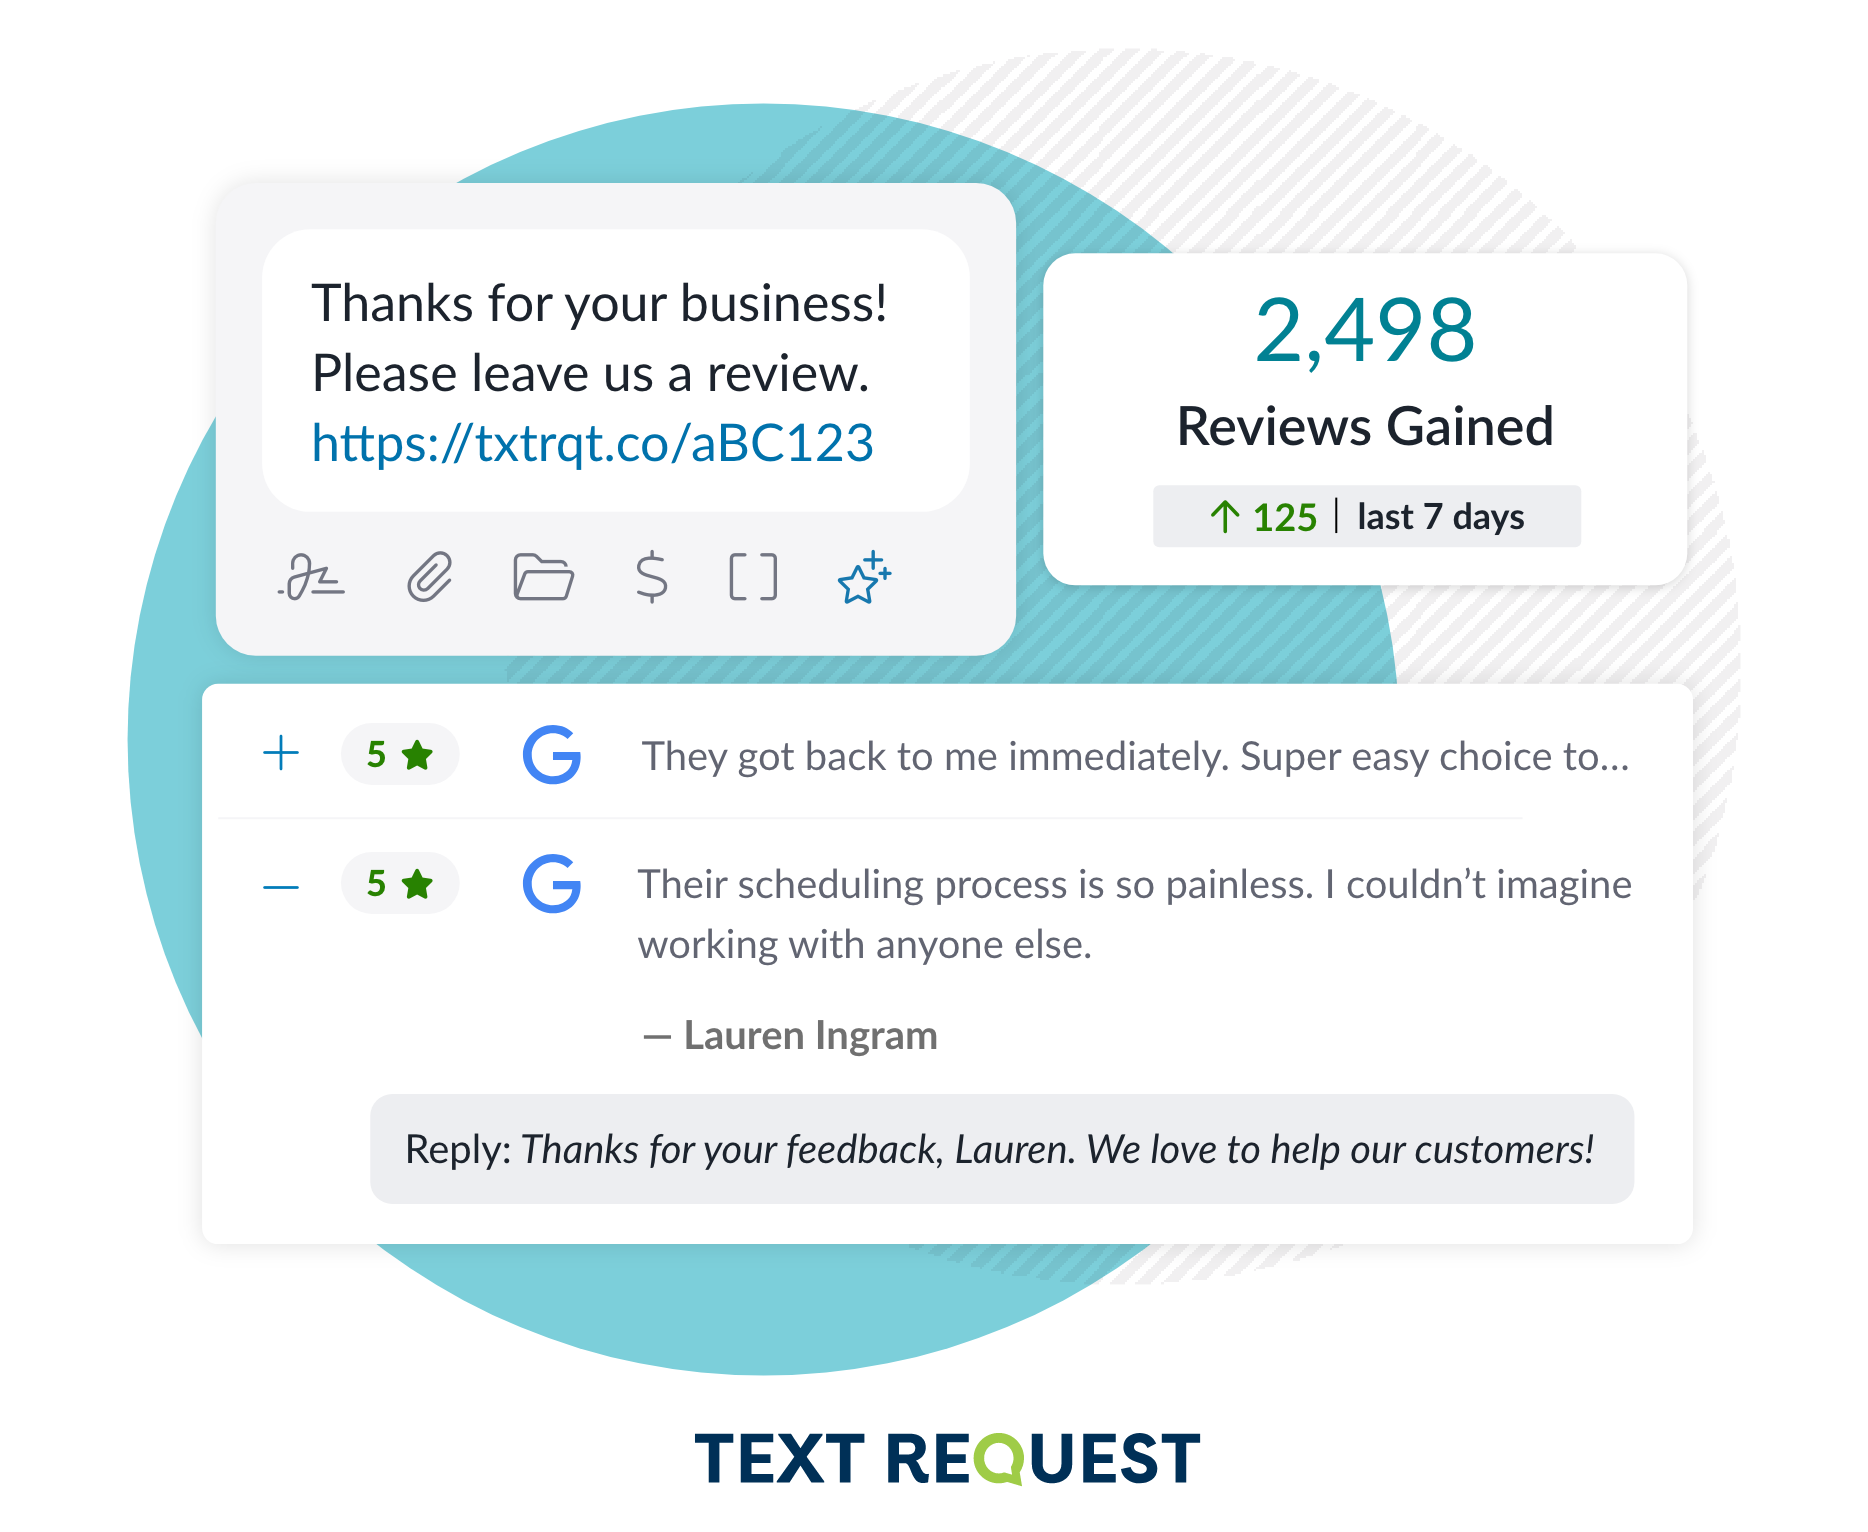 Text Request Google Review Management